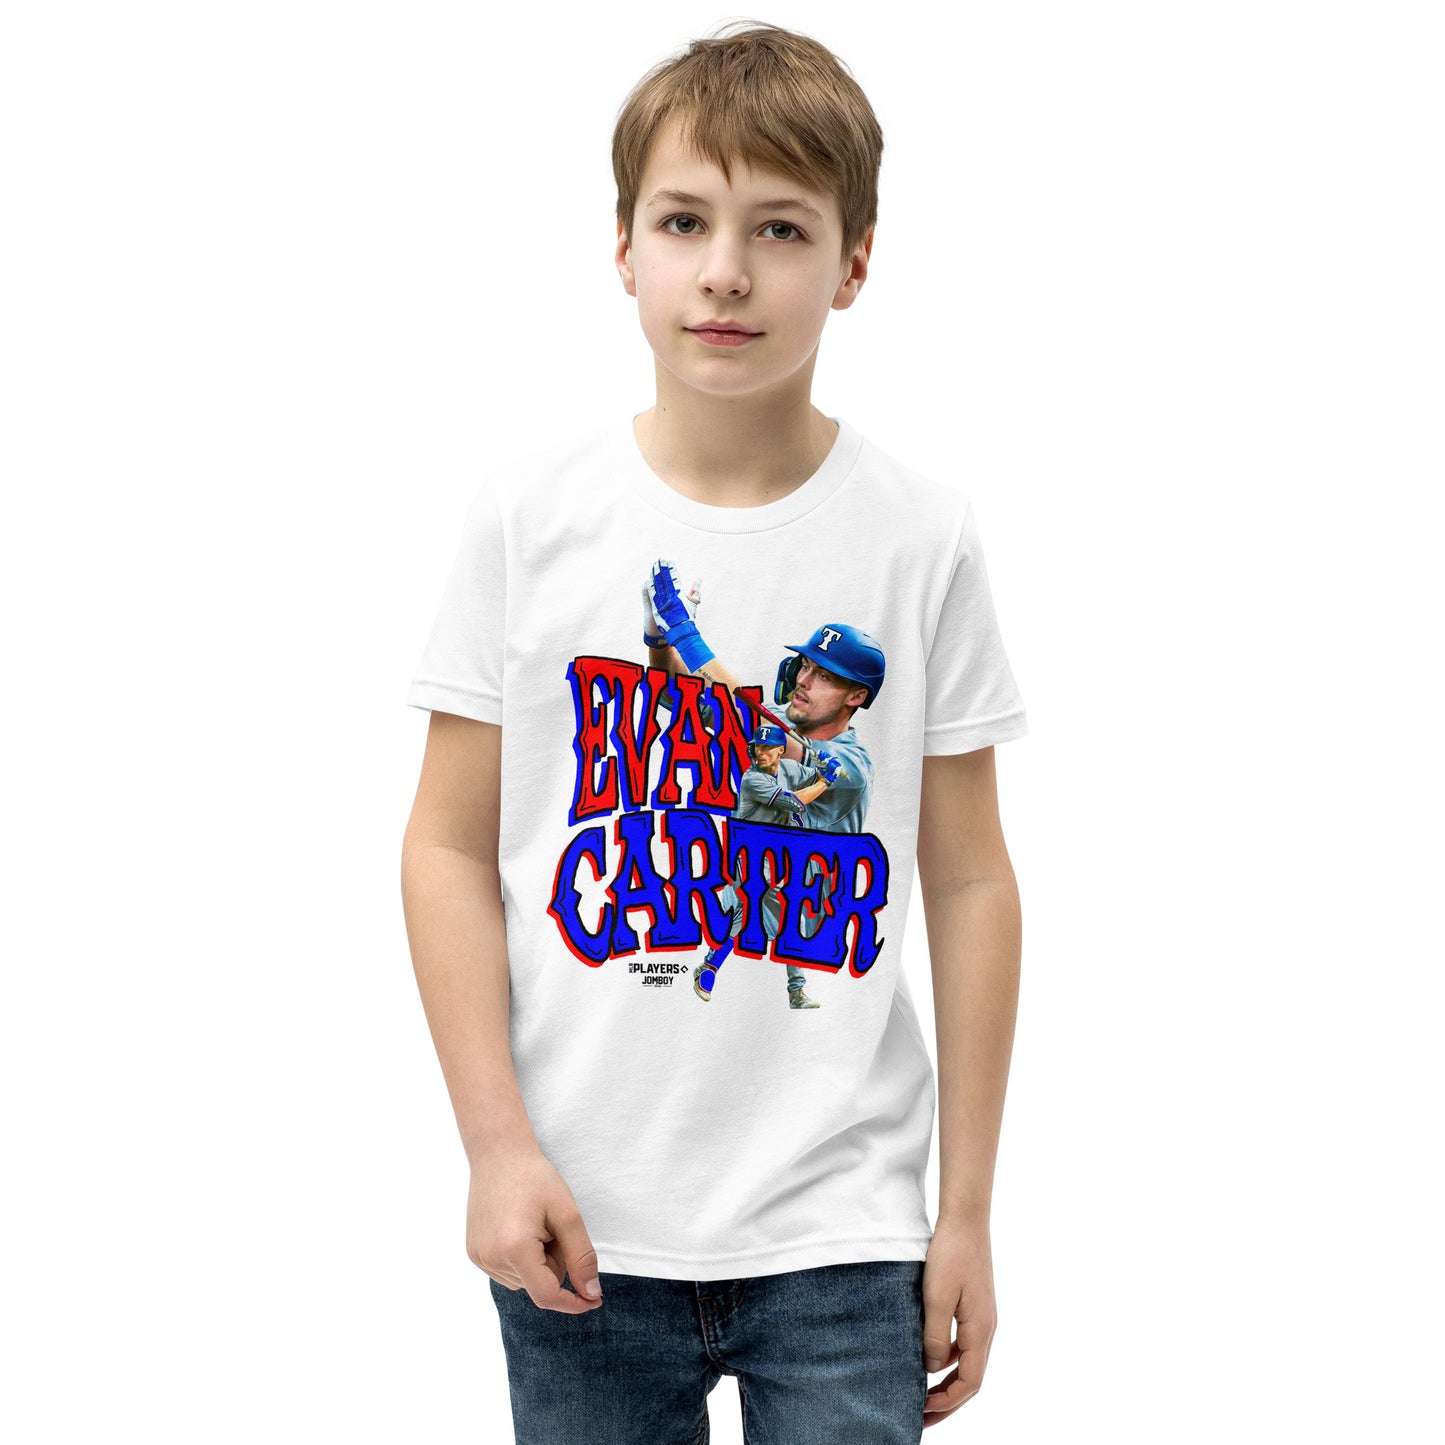 Evan Carter | Youth T-Shirt